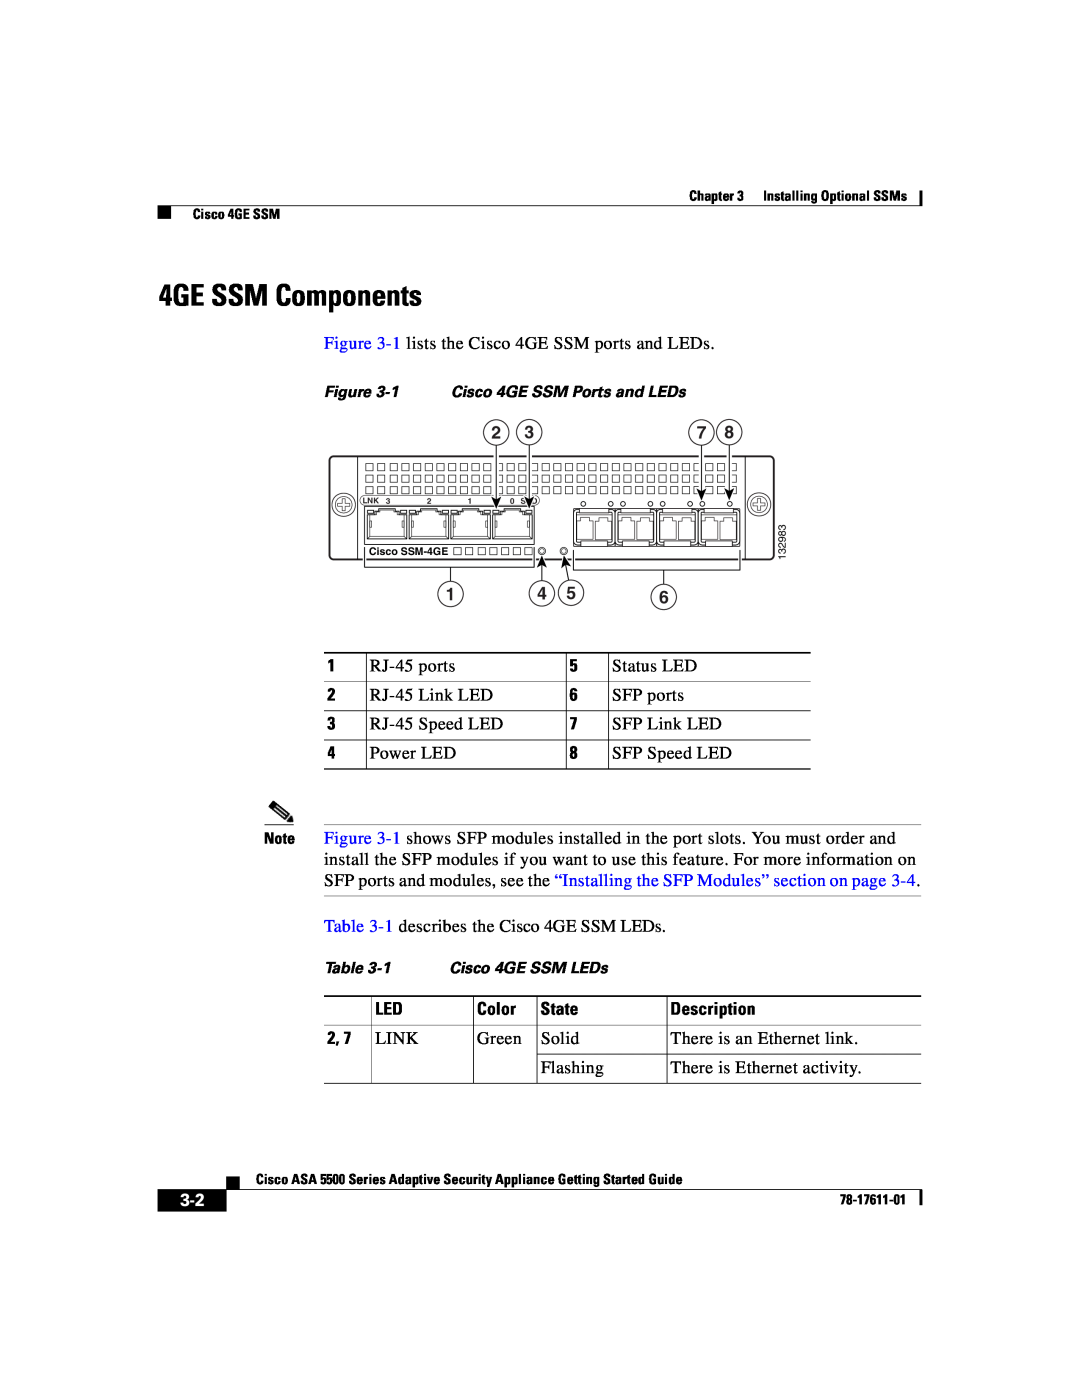 Cisco Systems ASA 5500 manual 4GE SSM Components, Color, State, Description 